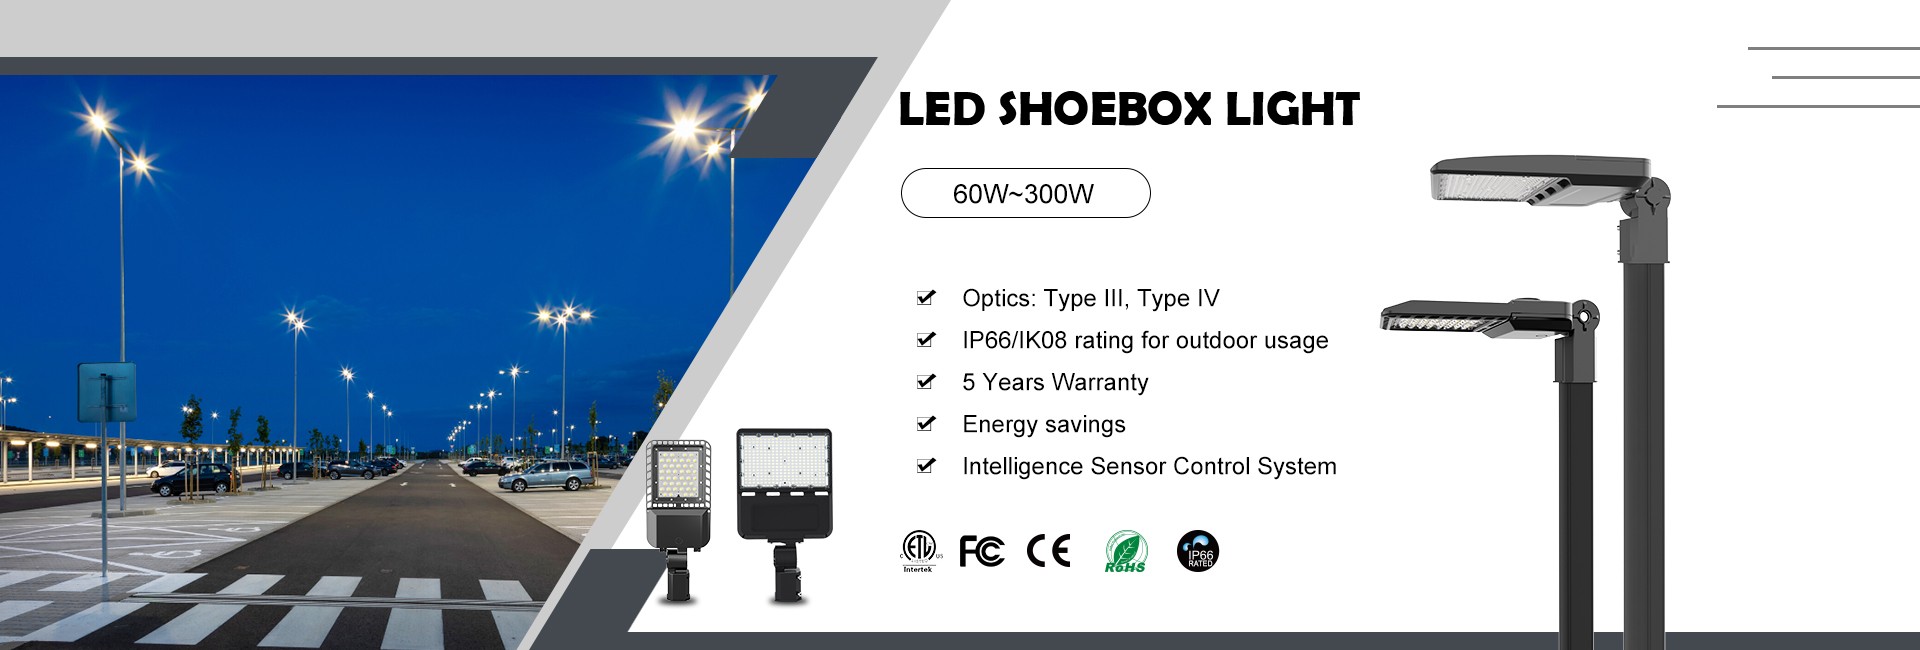 LED Shoebox Light